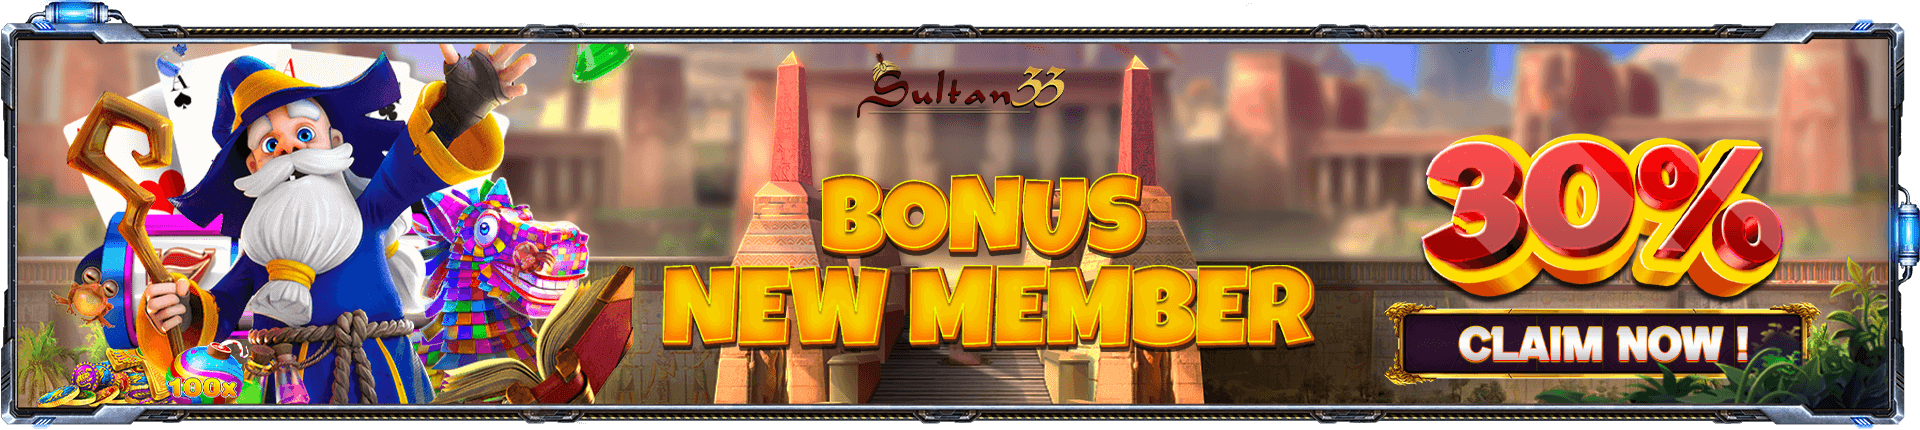 Bonus New Member 30%